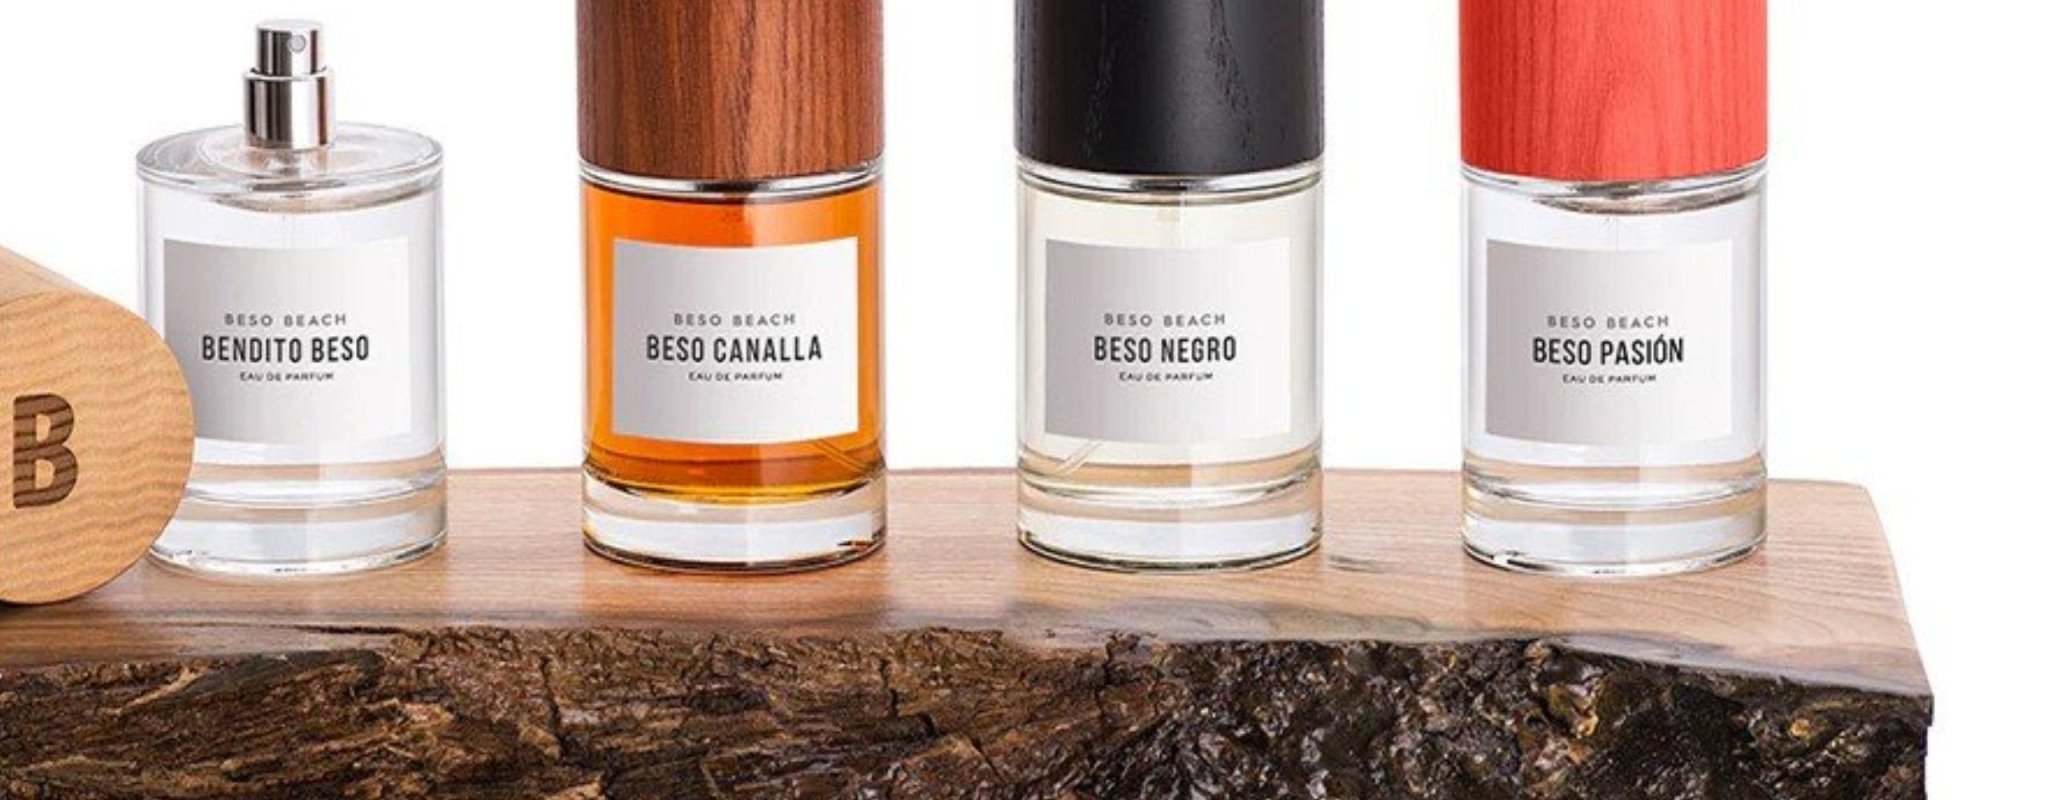 Beso Beach - Parfums - Maison Caldeira